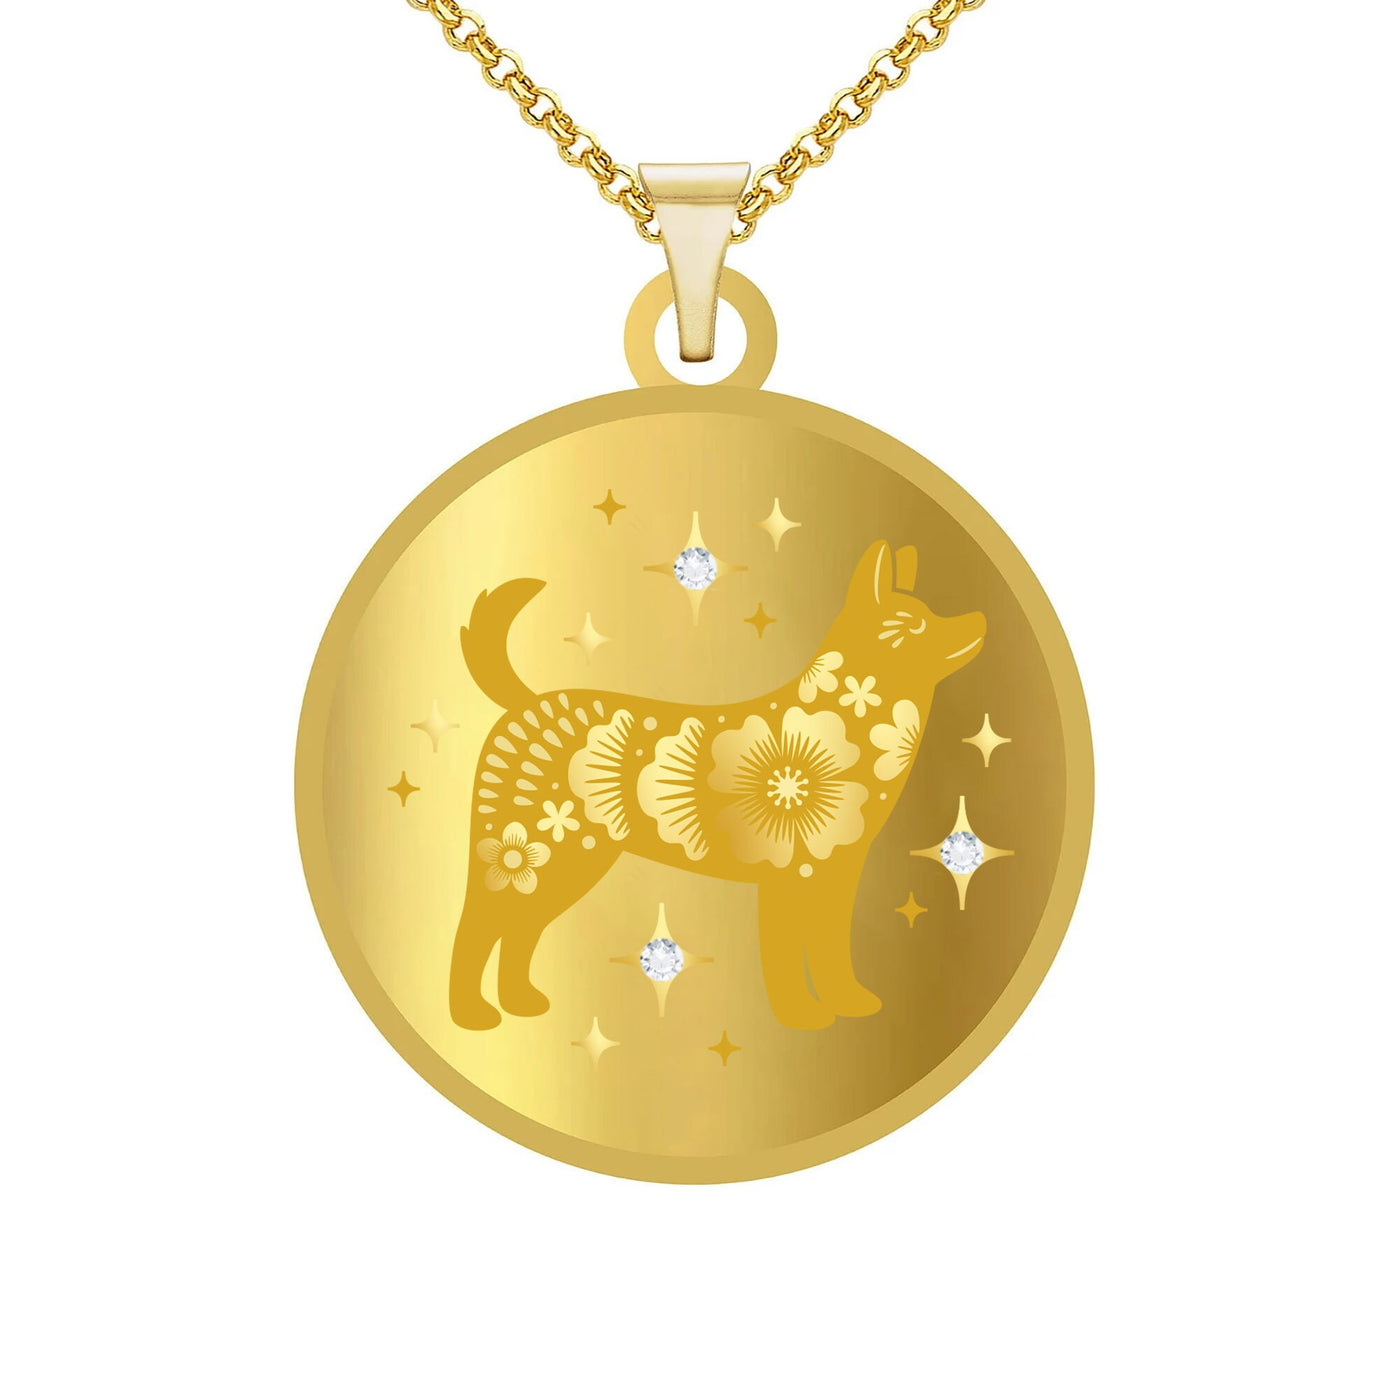 Year of The Dog (狗) Lunar Zodiac Coin Pendant